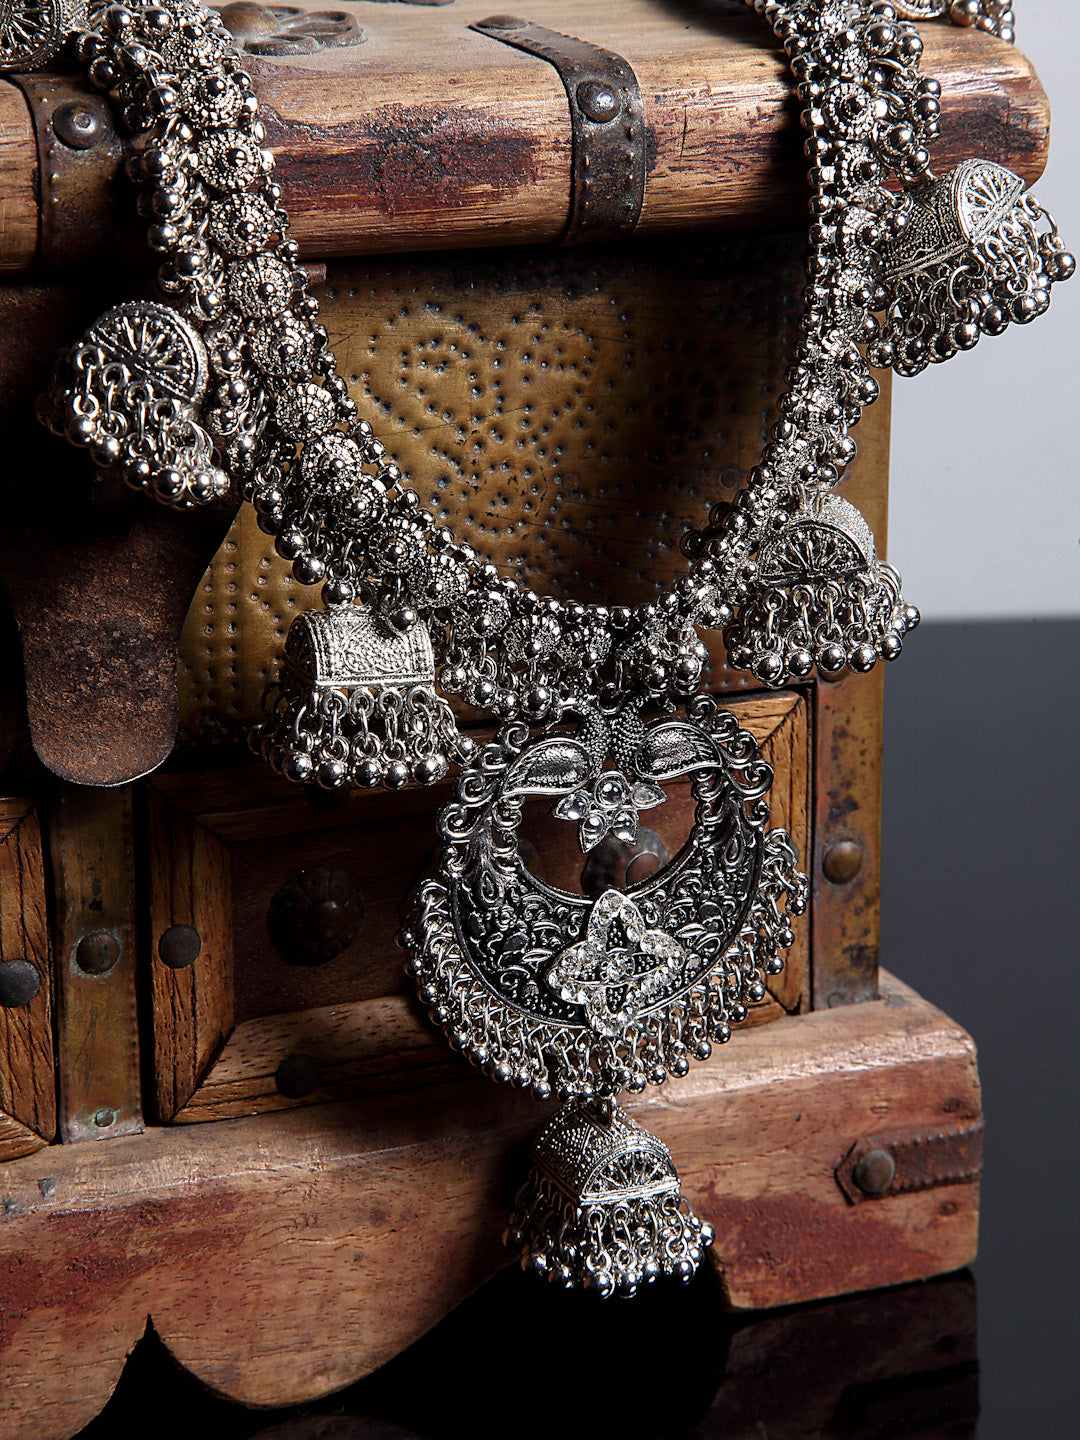 Arrabi Metallic Oxidised Necklace (30 cm)